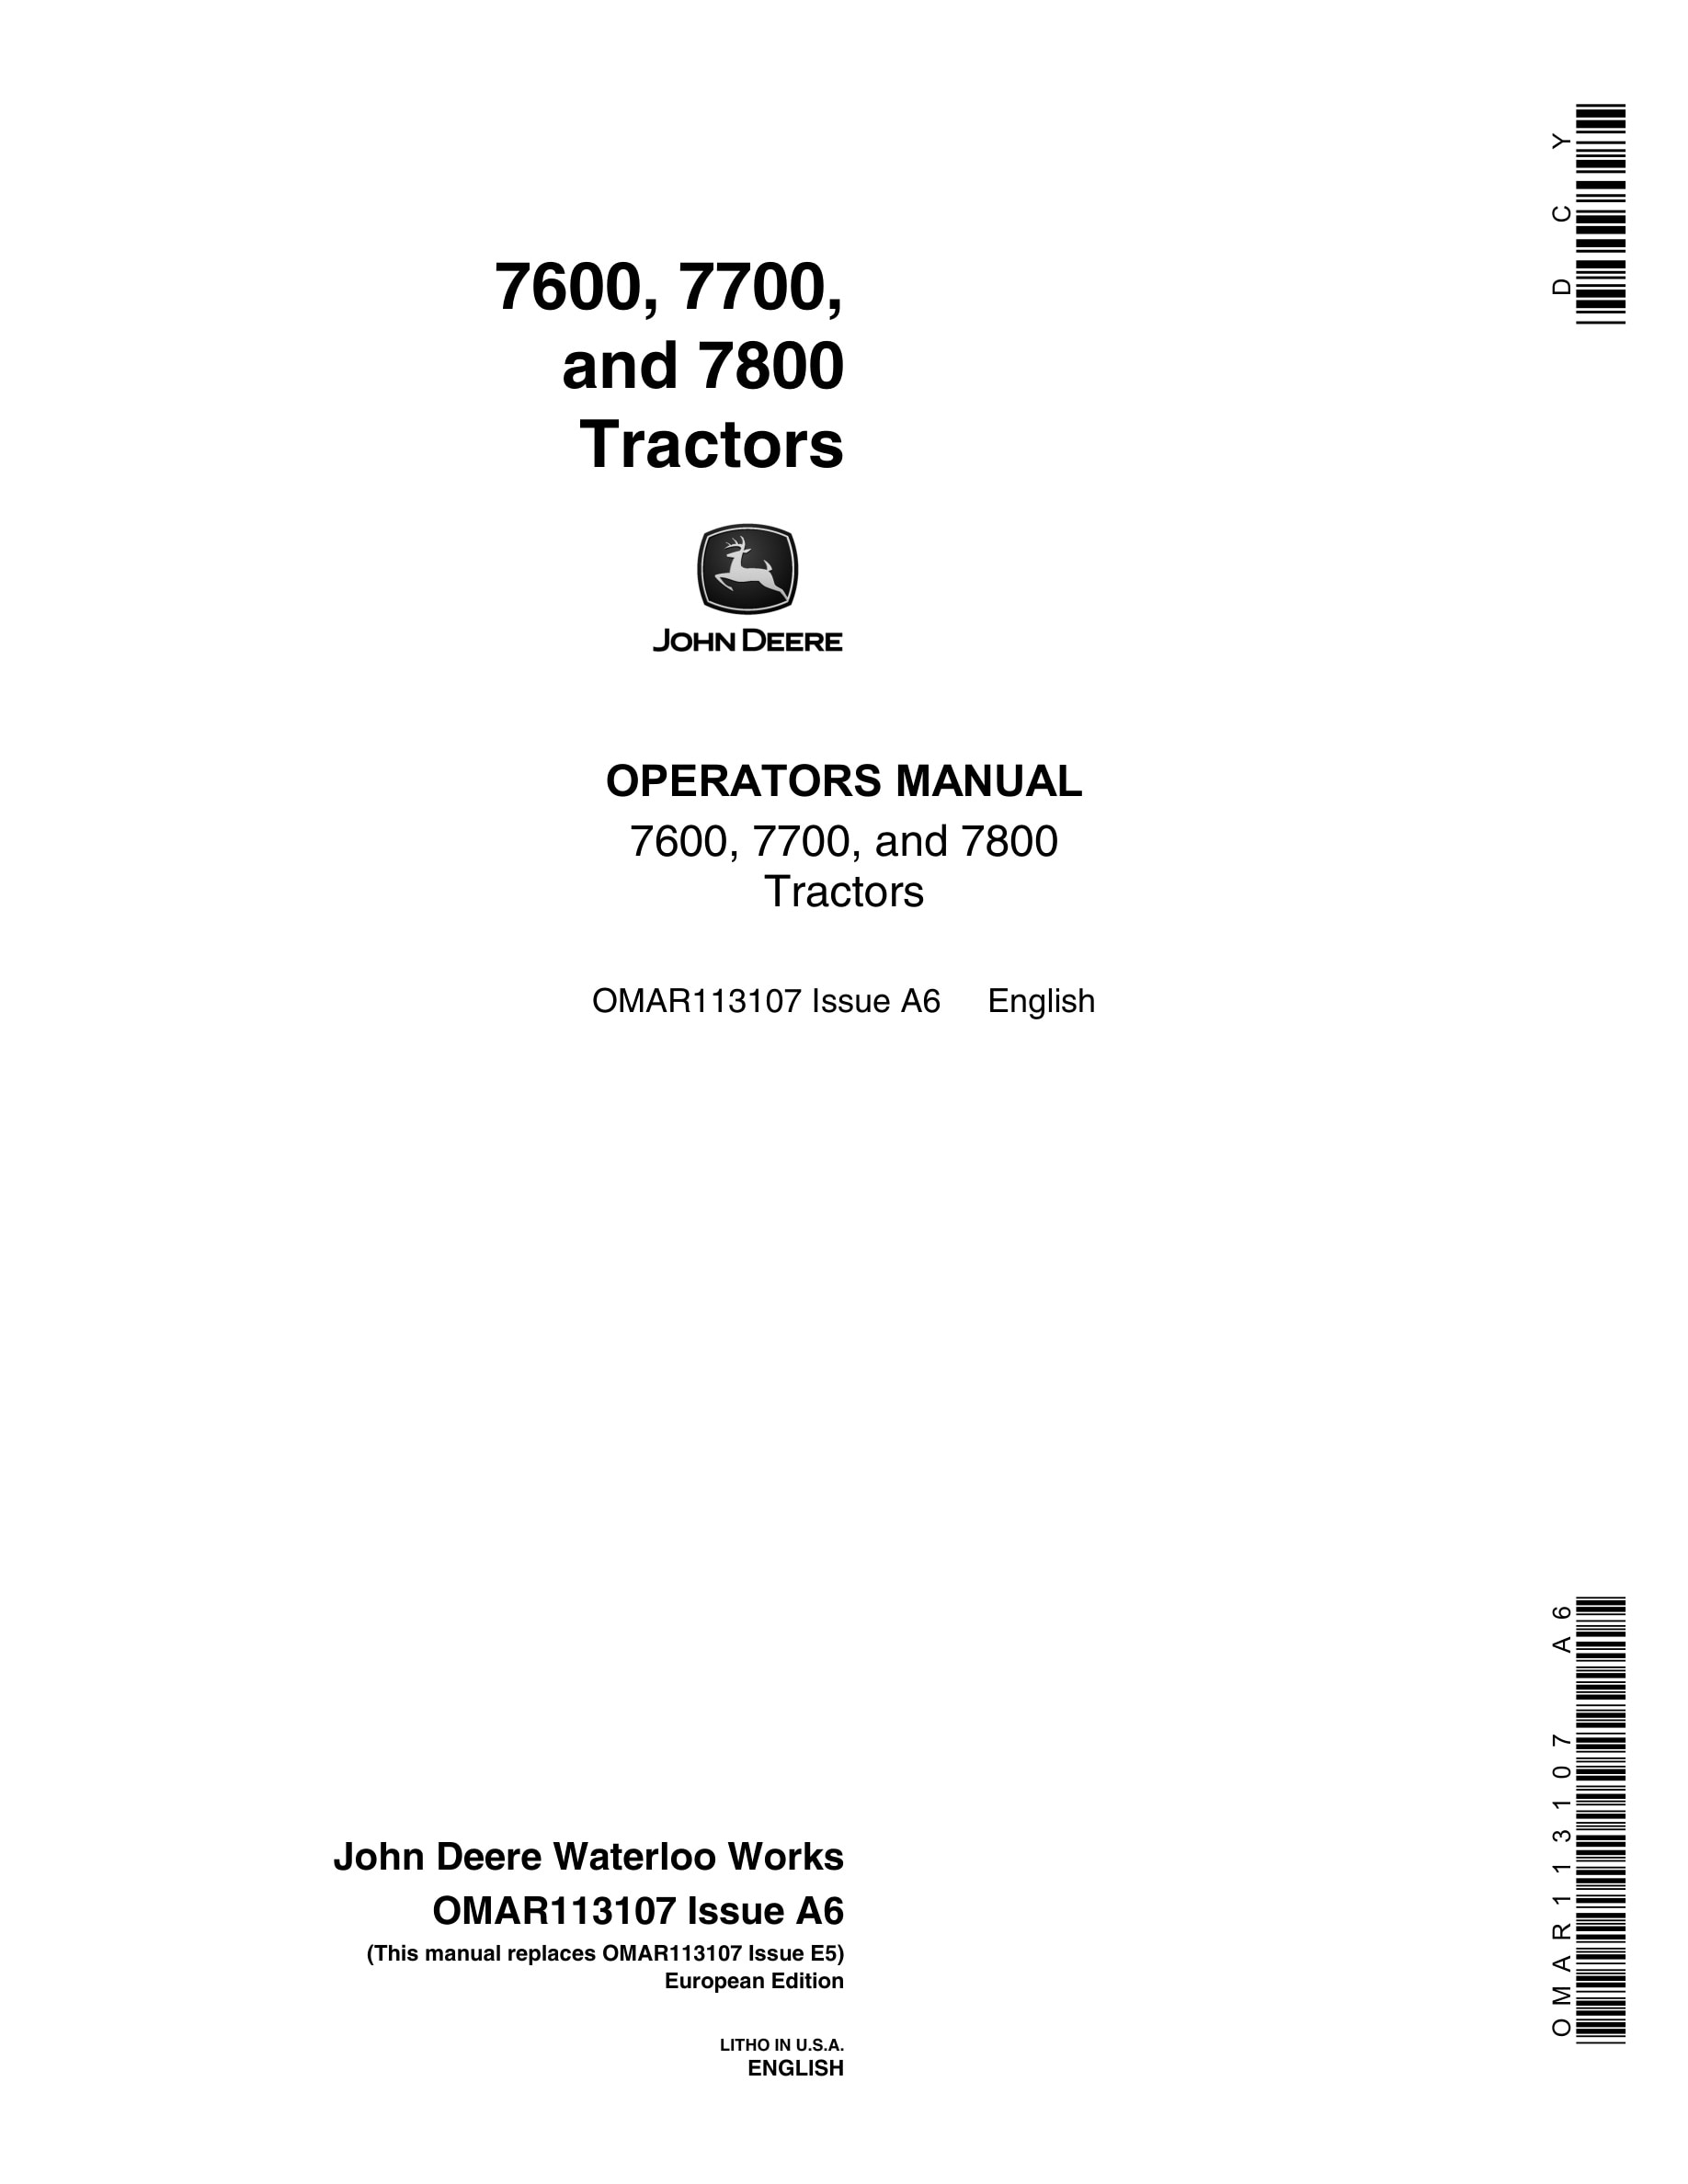 John Deere 7600, 7700, And 7800 Tractors Operator Manuals OMAR113107-1